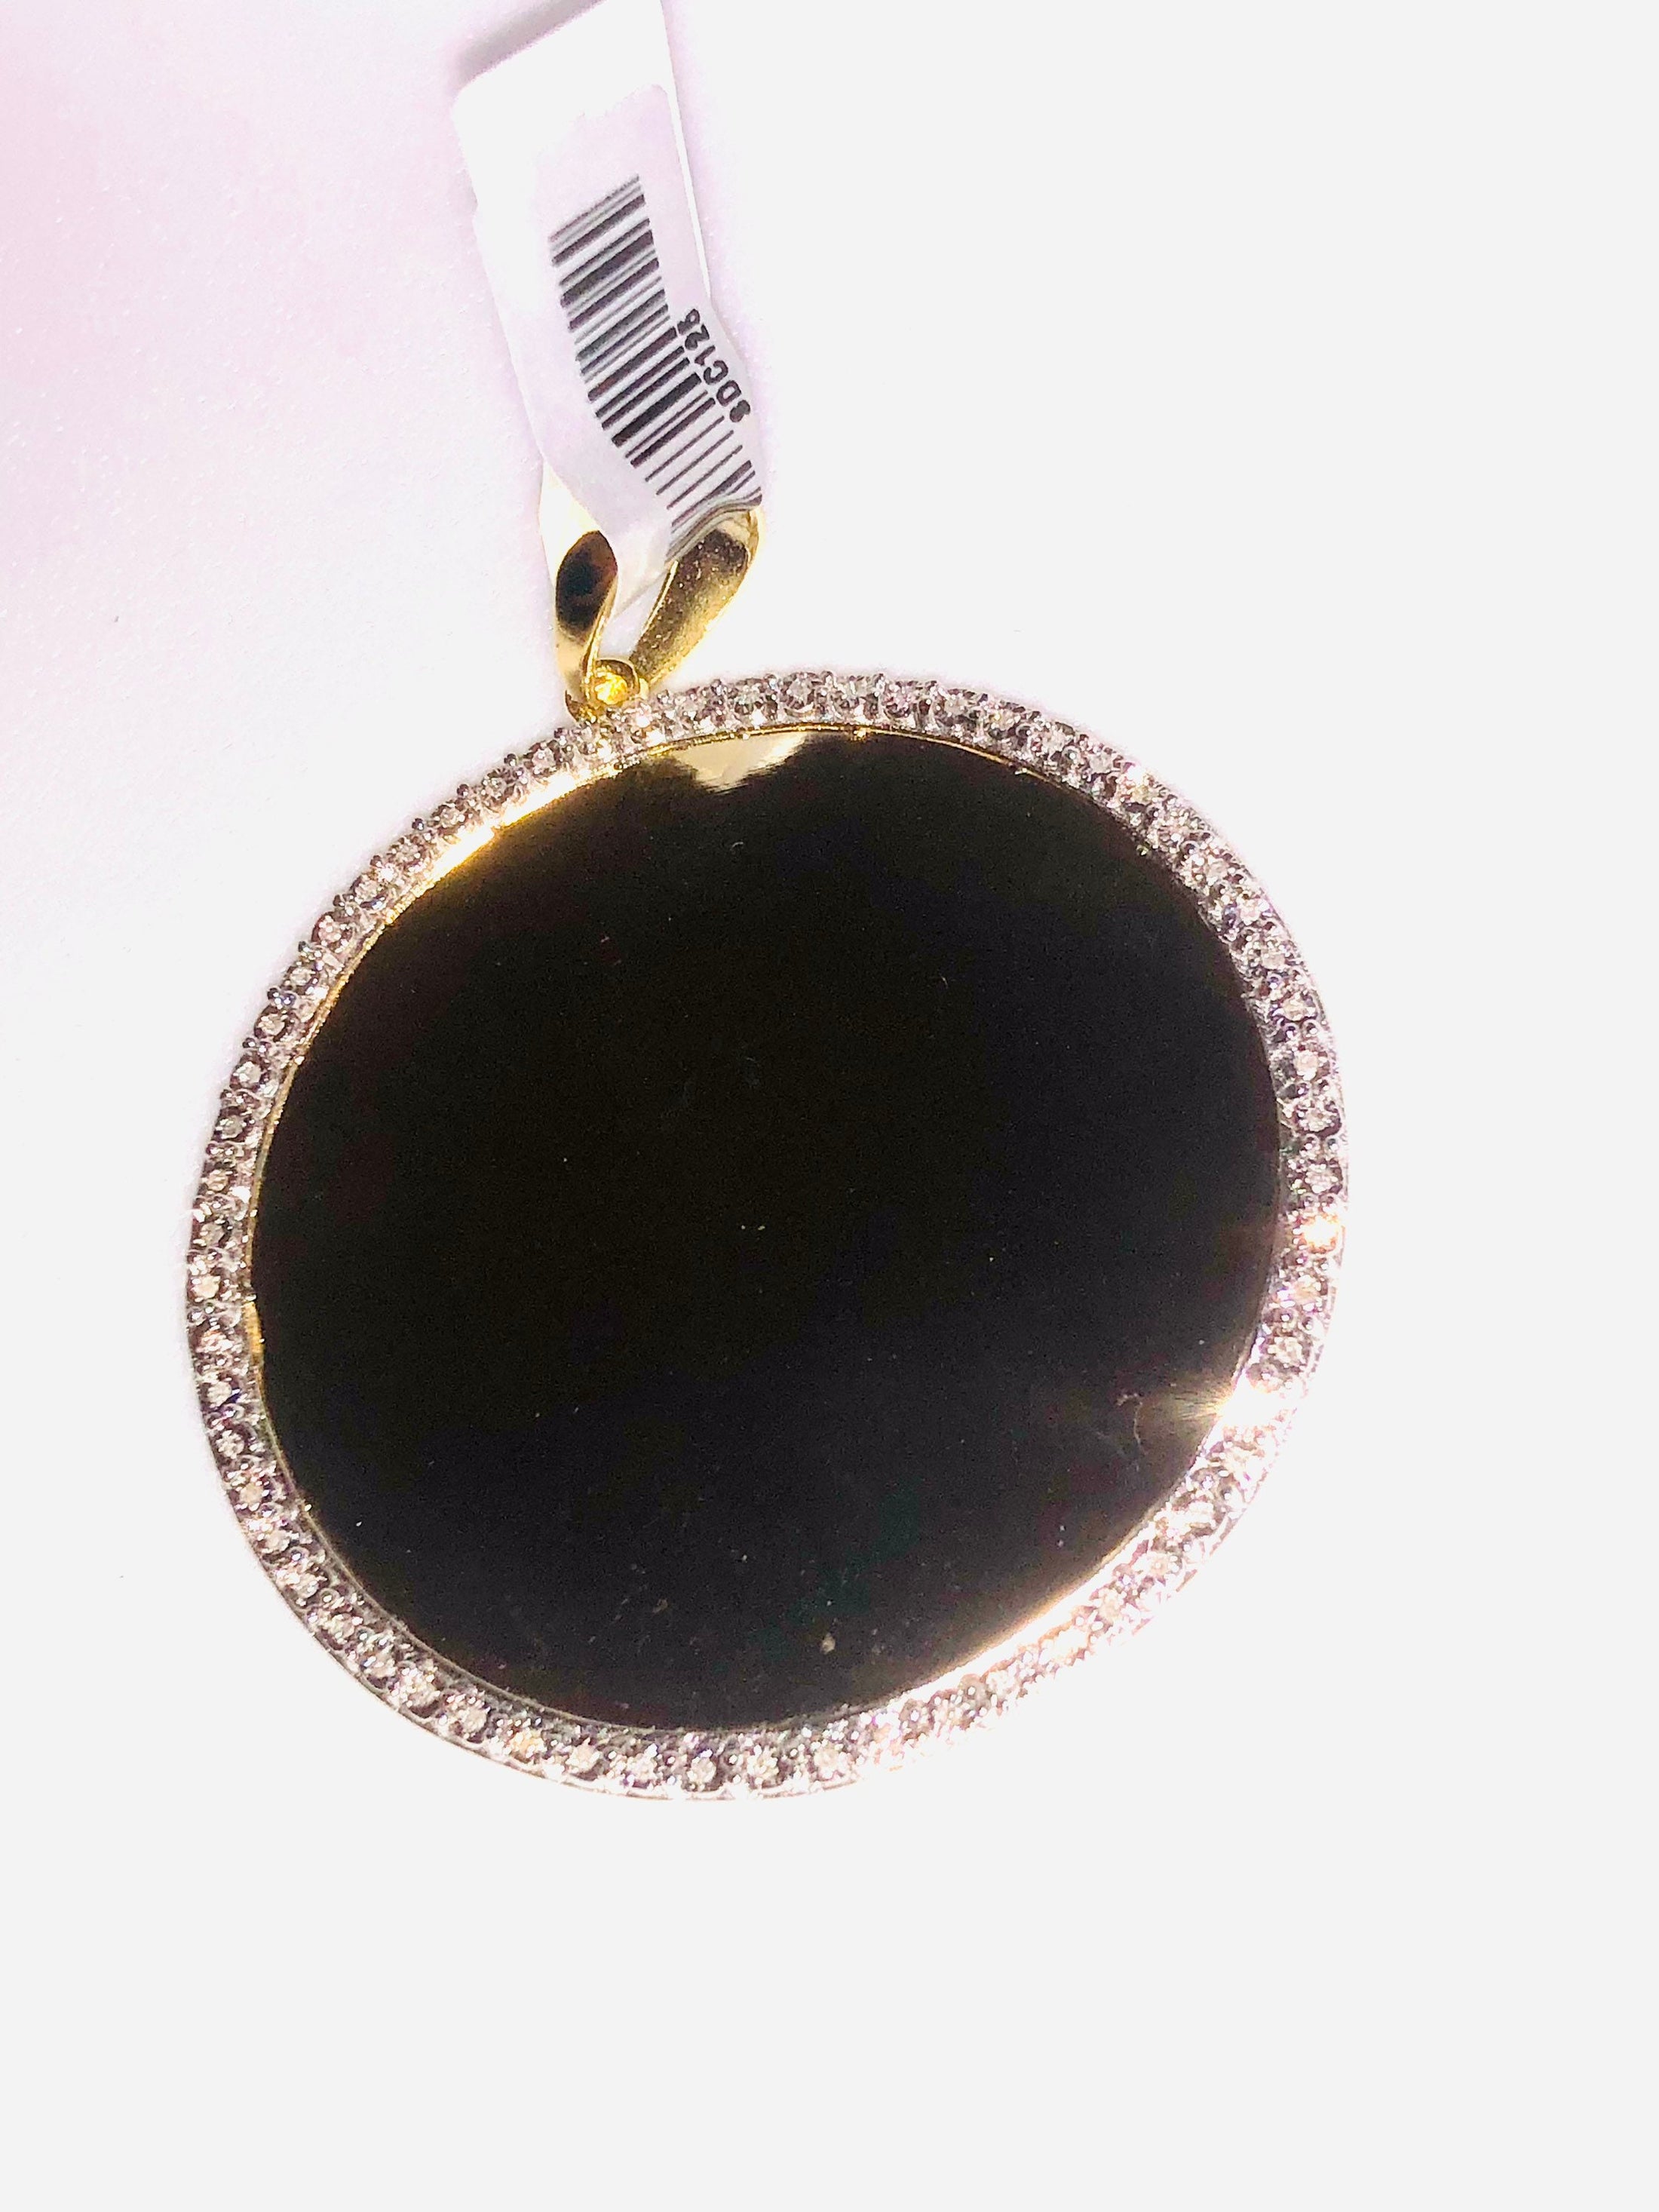 10k Gold Vermeil Real Diamond Memorial Jewelry | Custom Name/Photo Pendant | Memory Pendant| In Loving Memory Charm | Memorial Necklace Gift